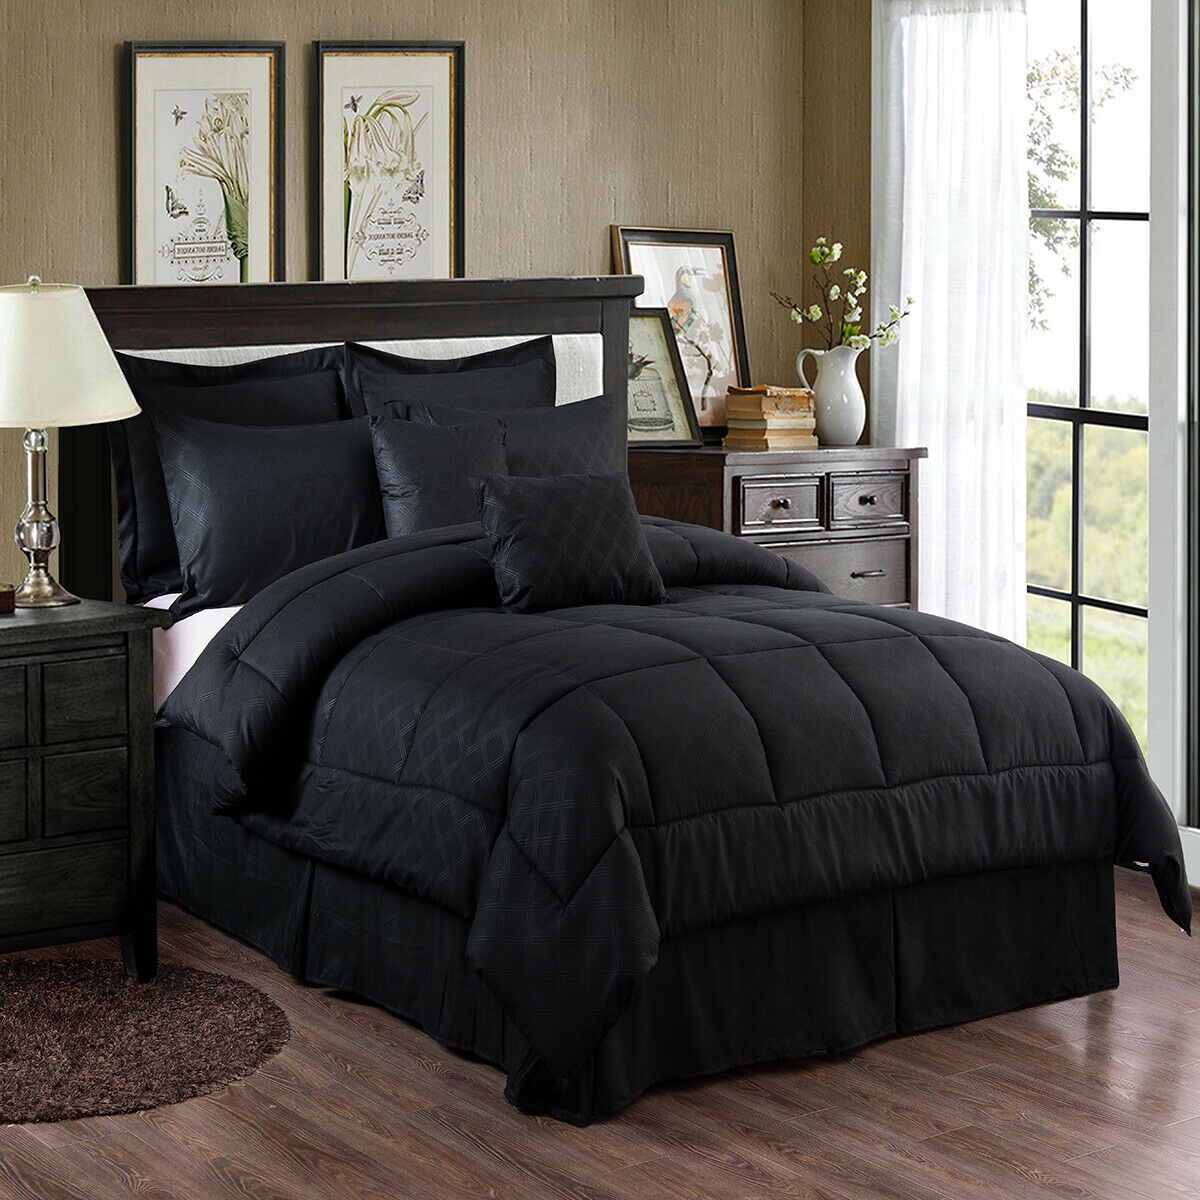 Queen/King/Cal King Comforter Set 10 Piece Reversible Bed in a Bag Bedding Set